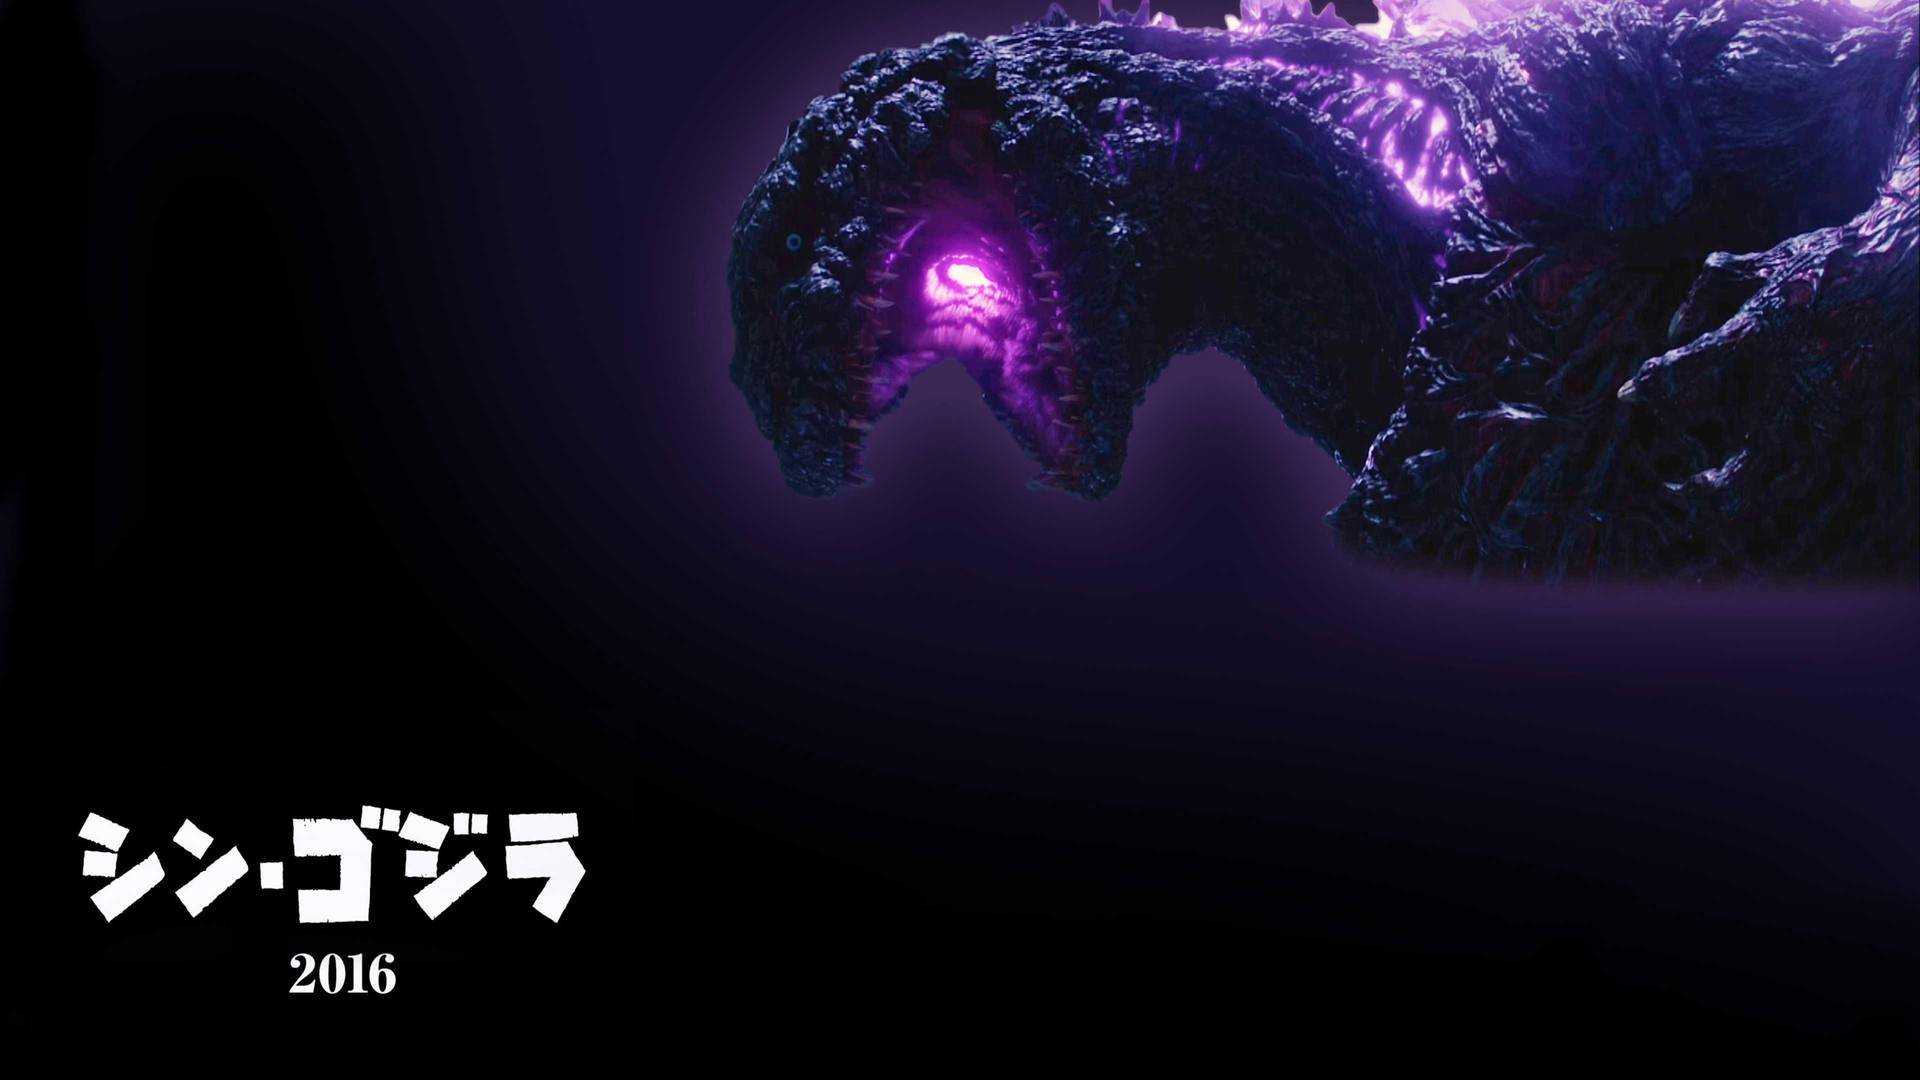 Shin Godzilla 2016 Movie Katakana Wallpaper